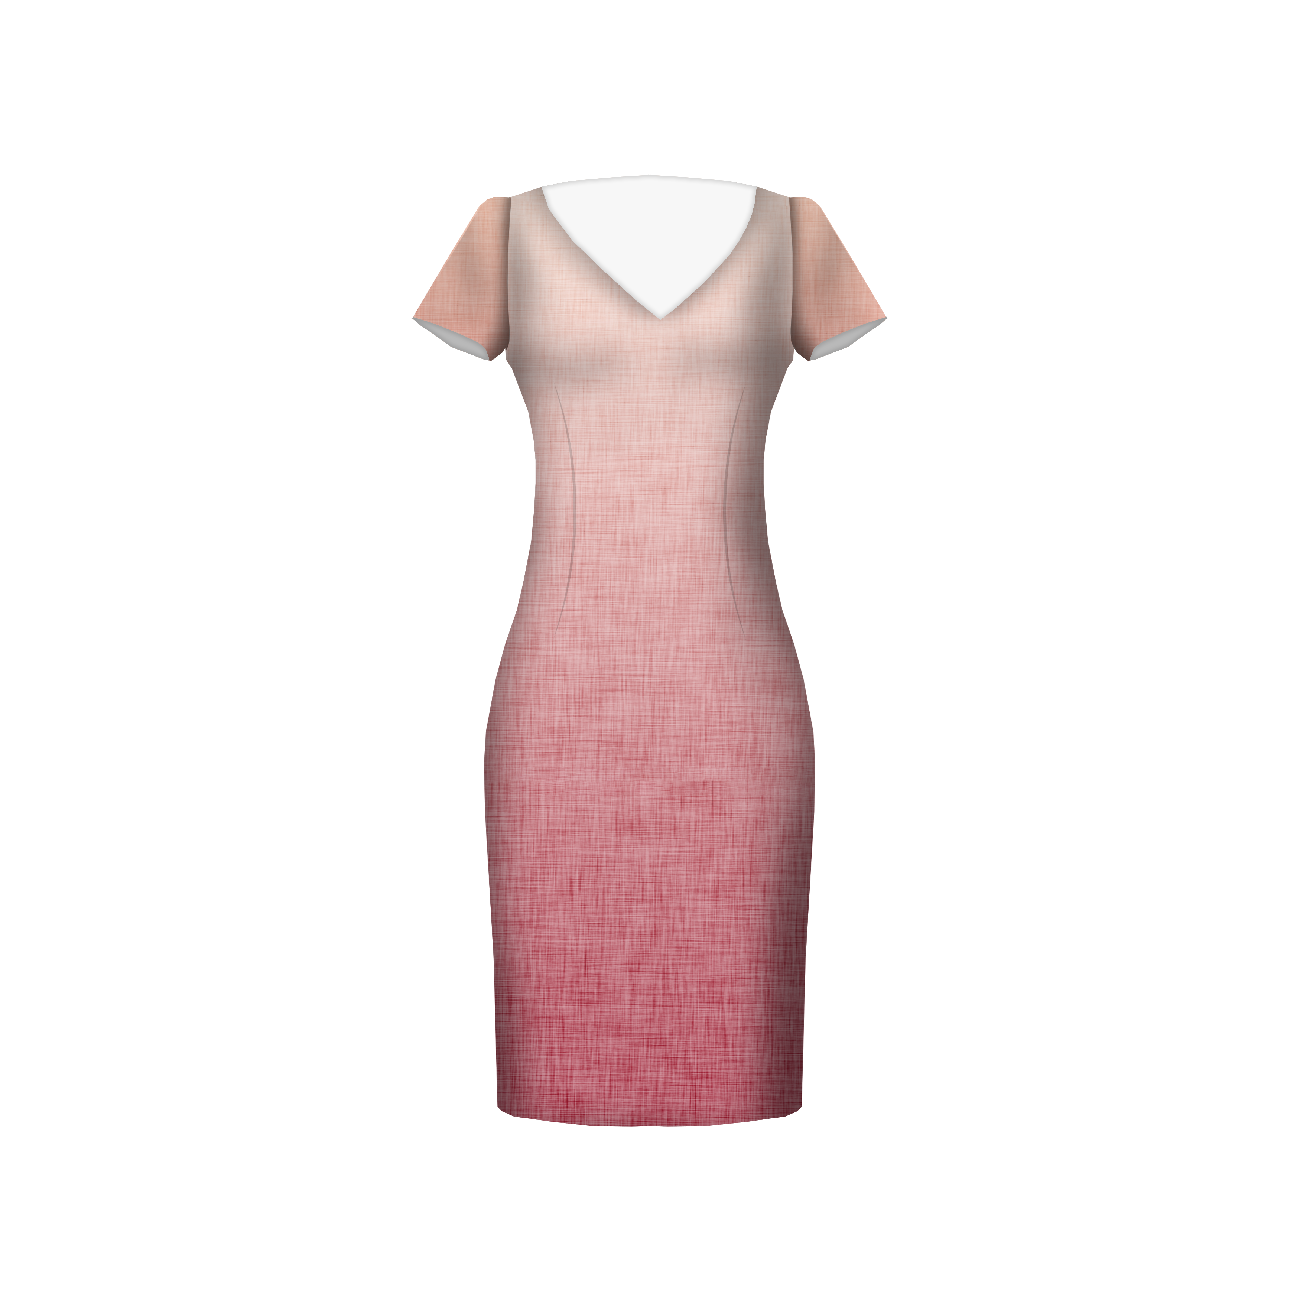 OMBRE / ACID WASH - fuksja (blady róż) - panel sukienkowy TE210